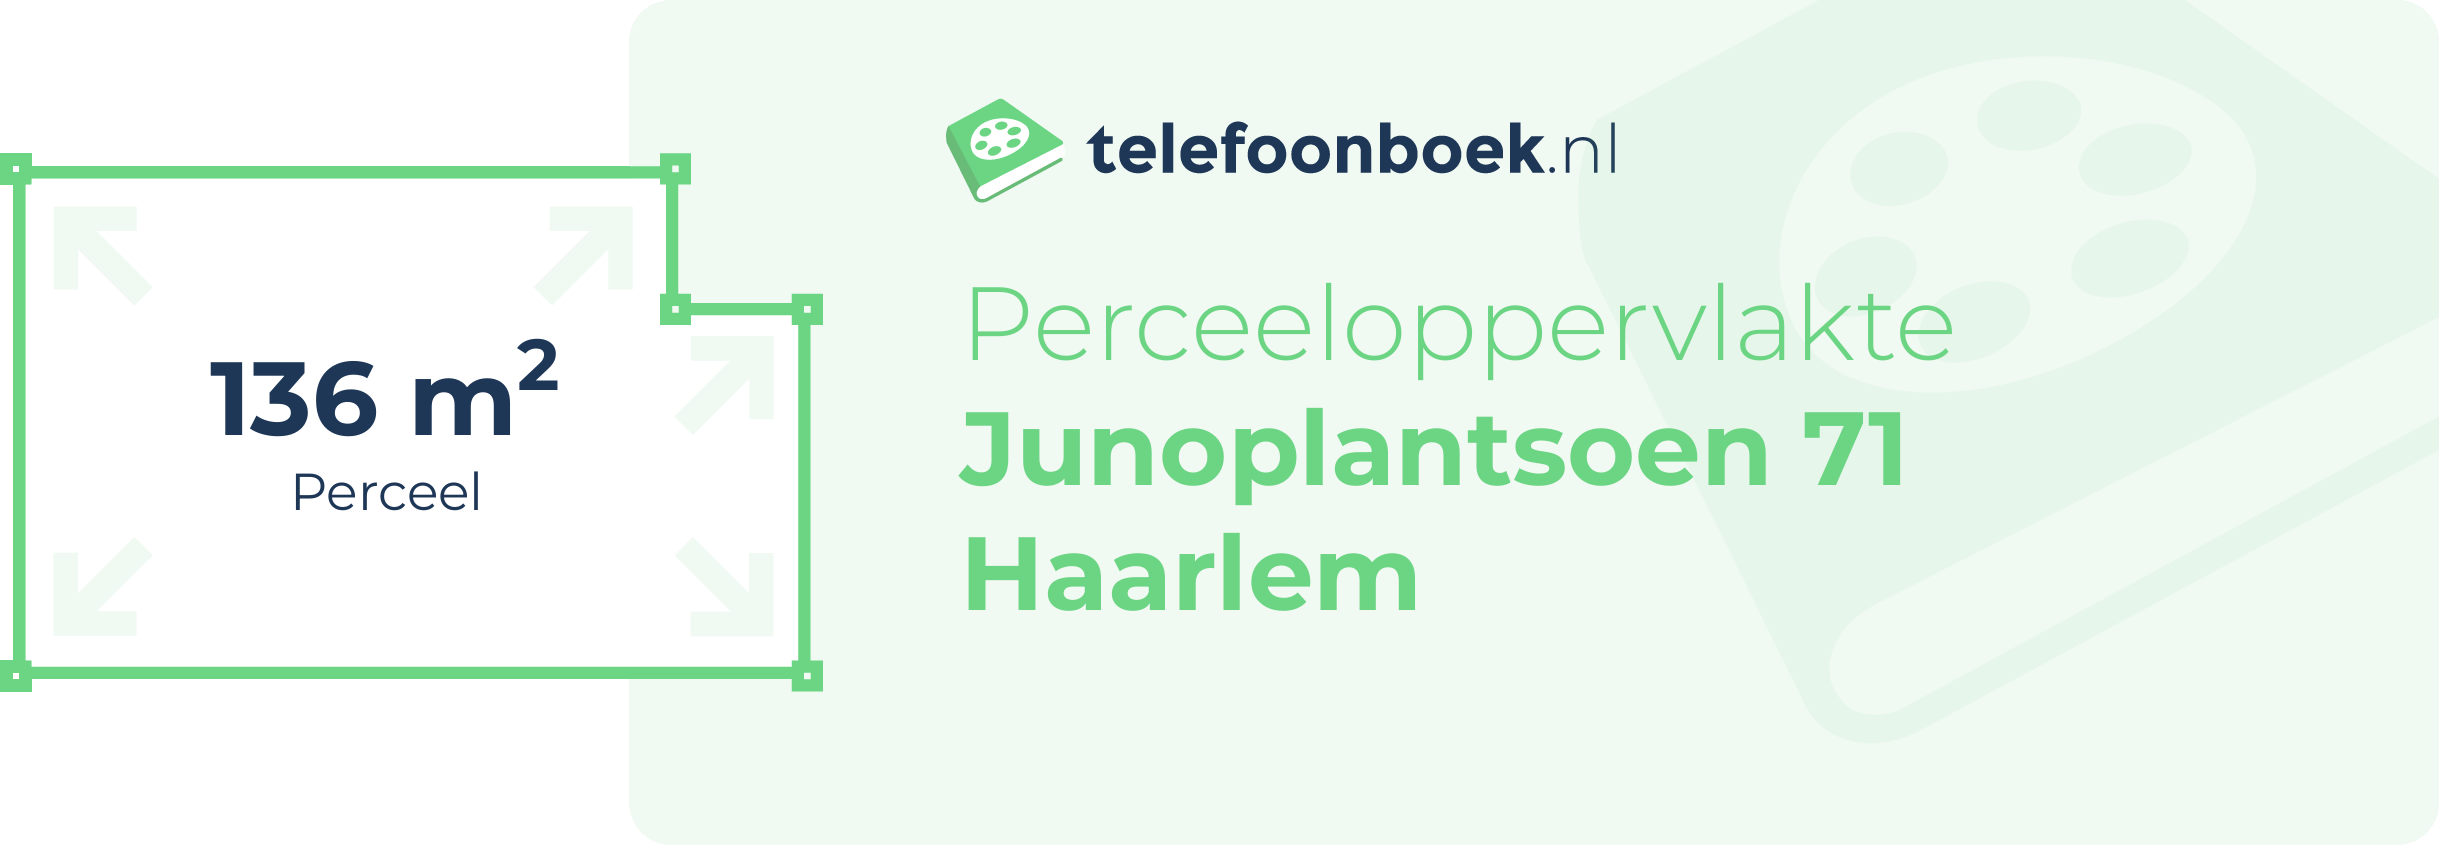 Perceeloppervlakte Junoplantsoen 71 Haarlem